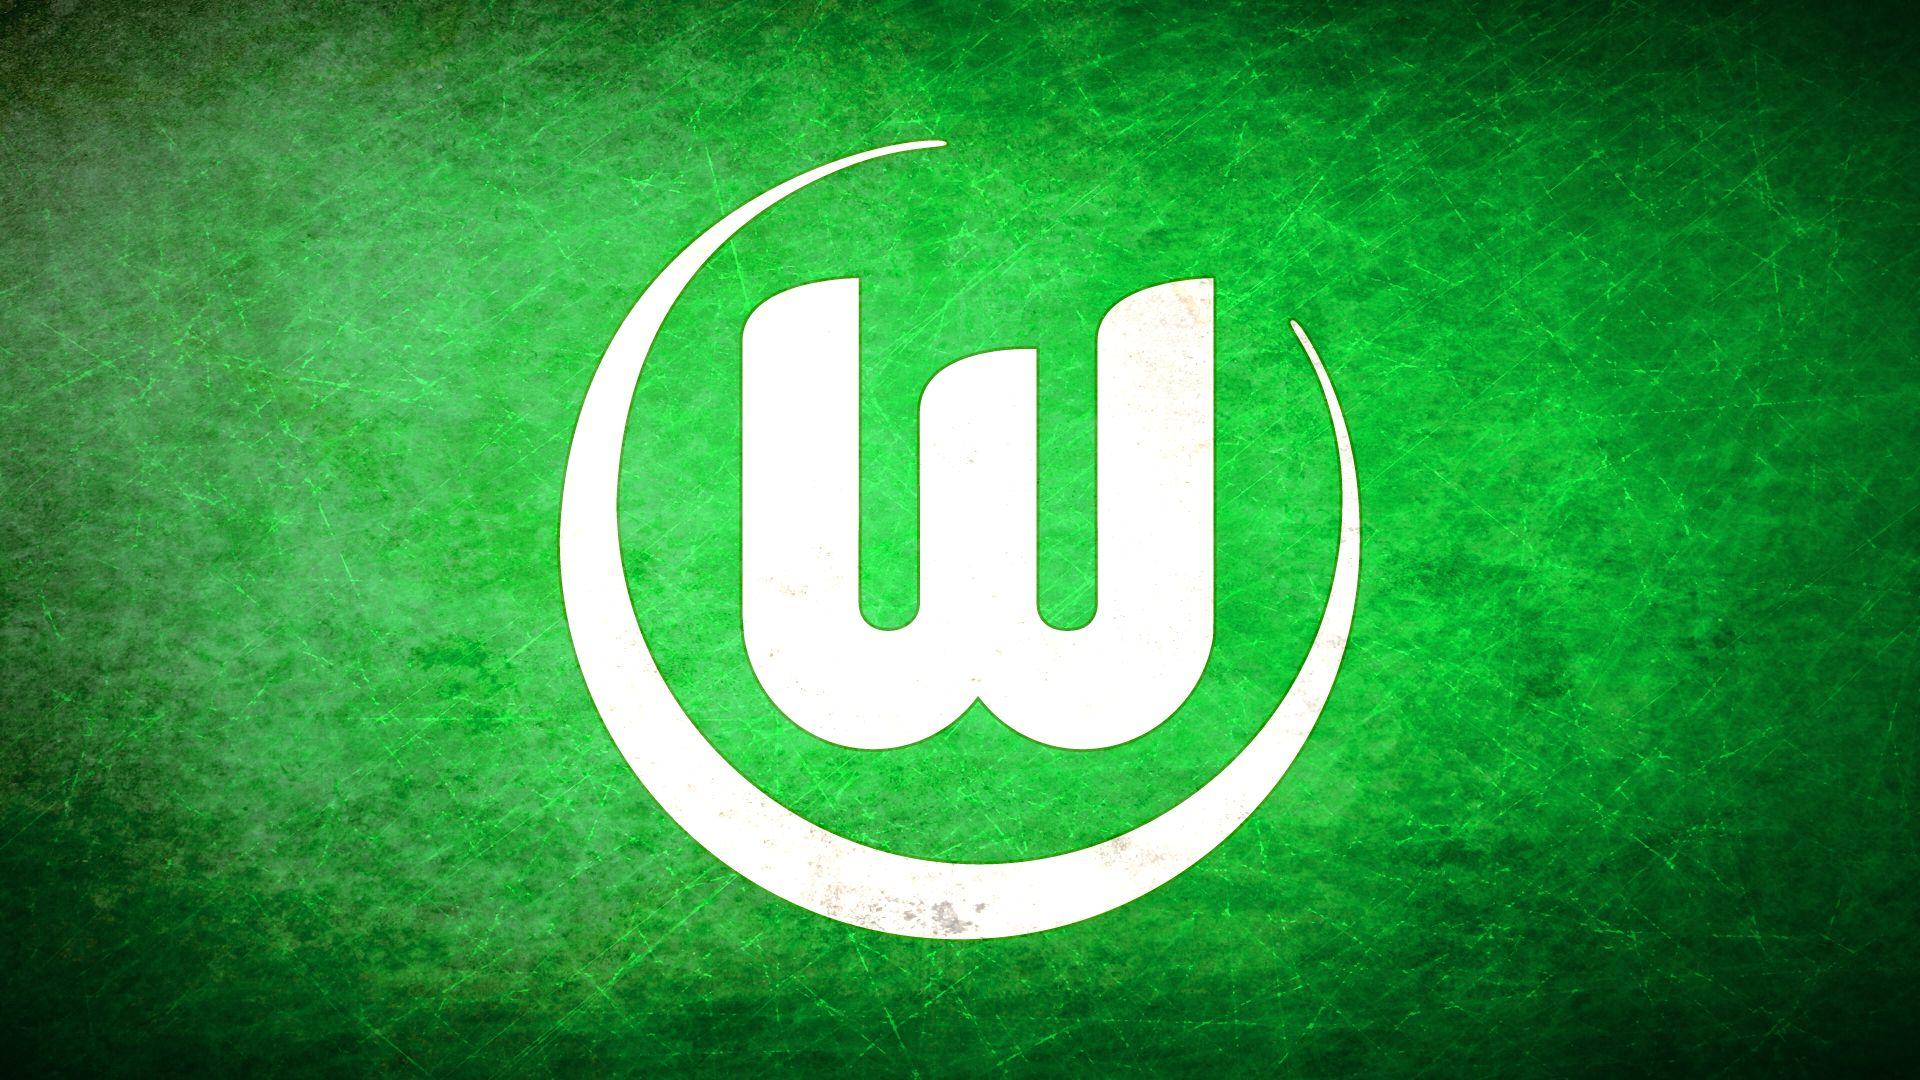 VfL Wolfsburg Logo Germany Football Club Wallp Wallpaper